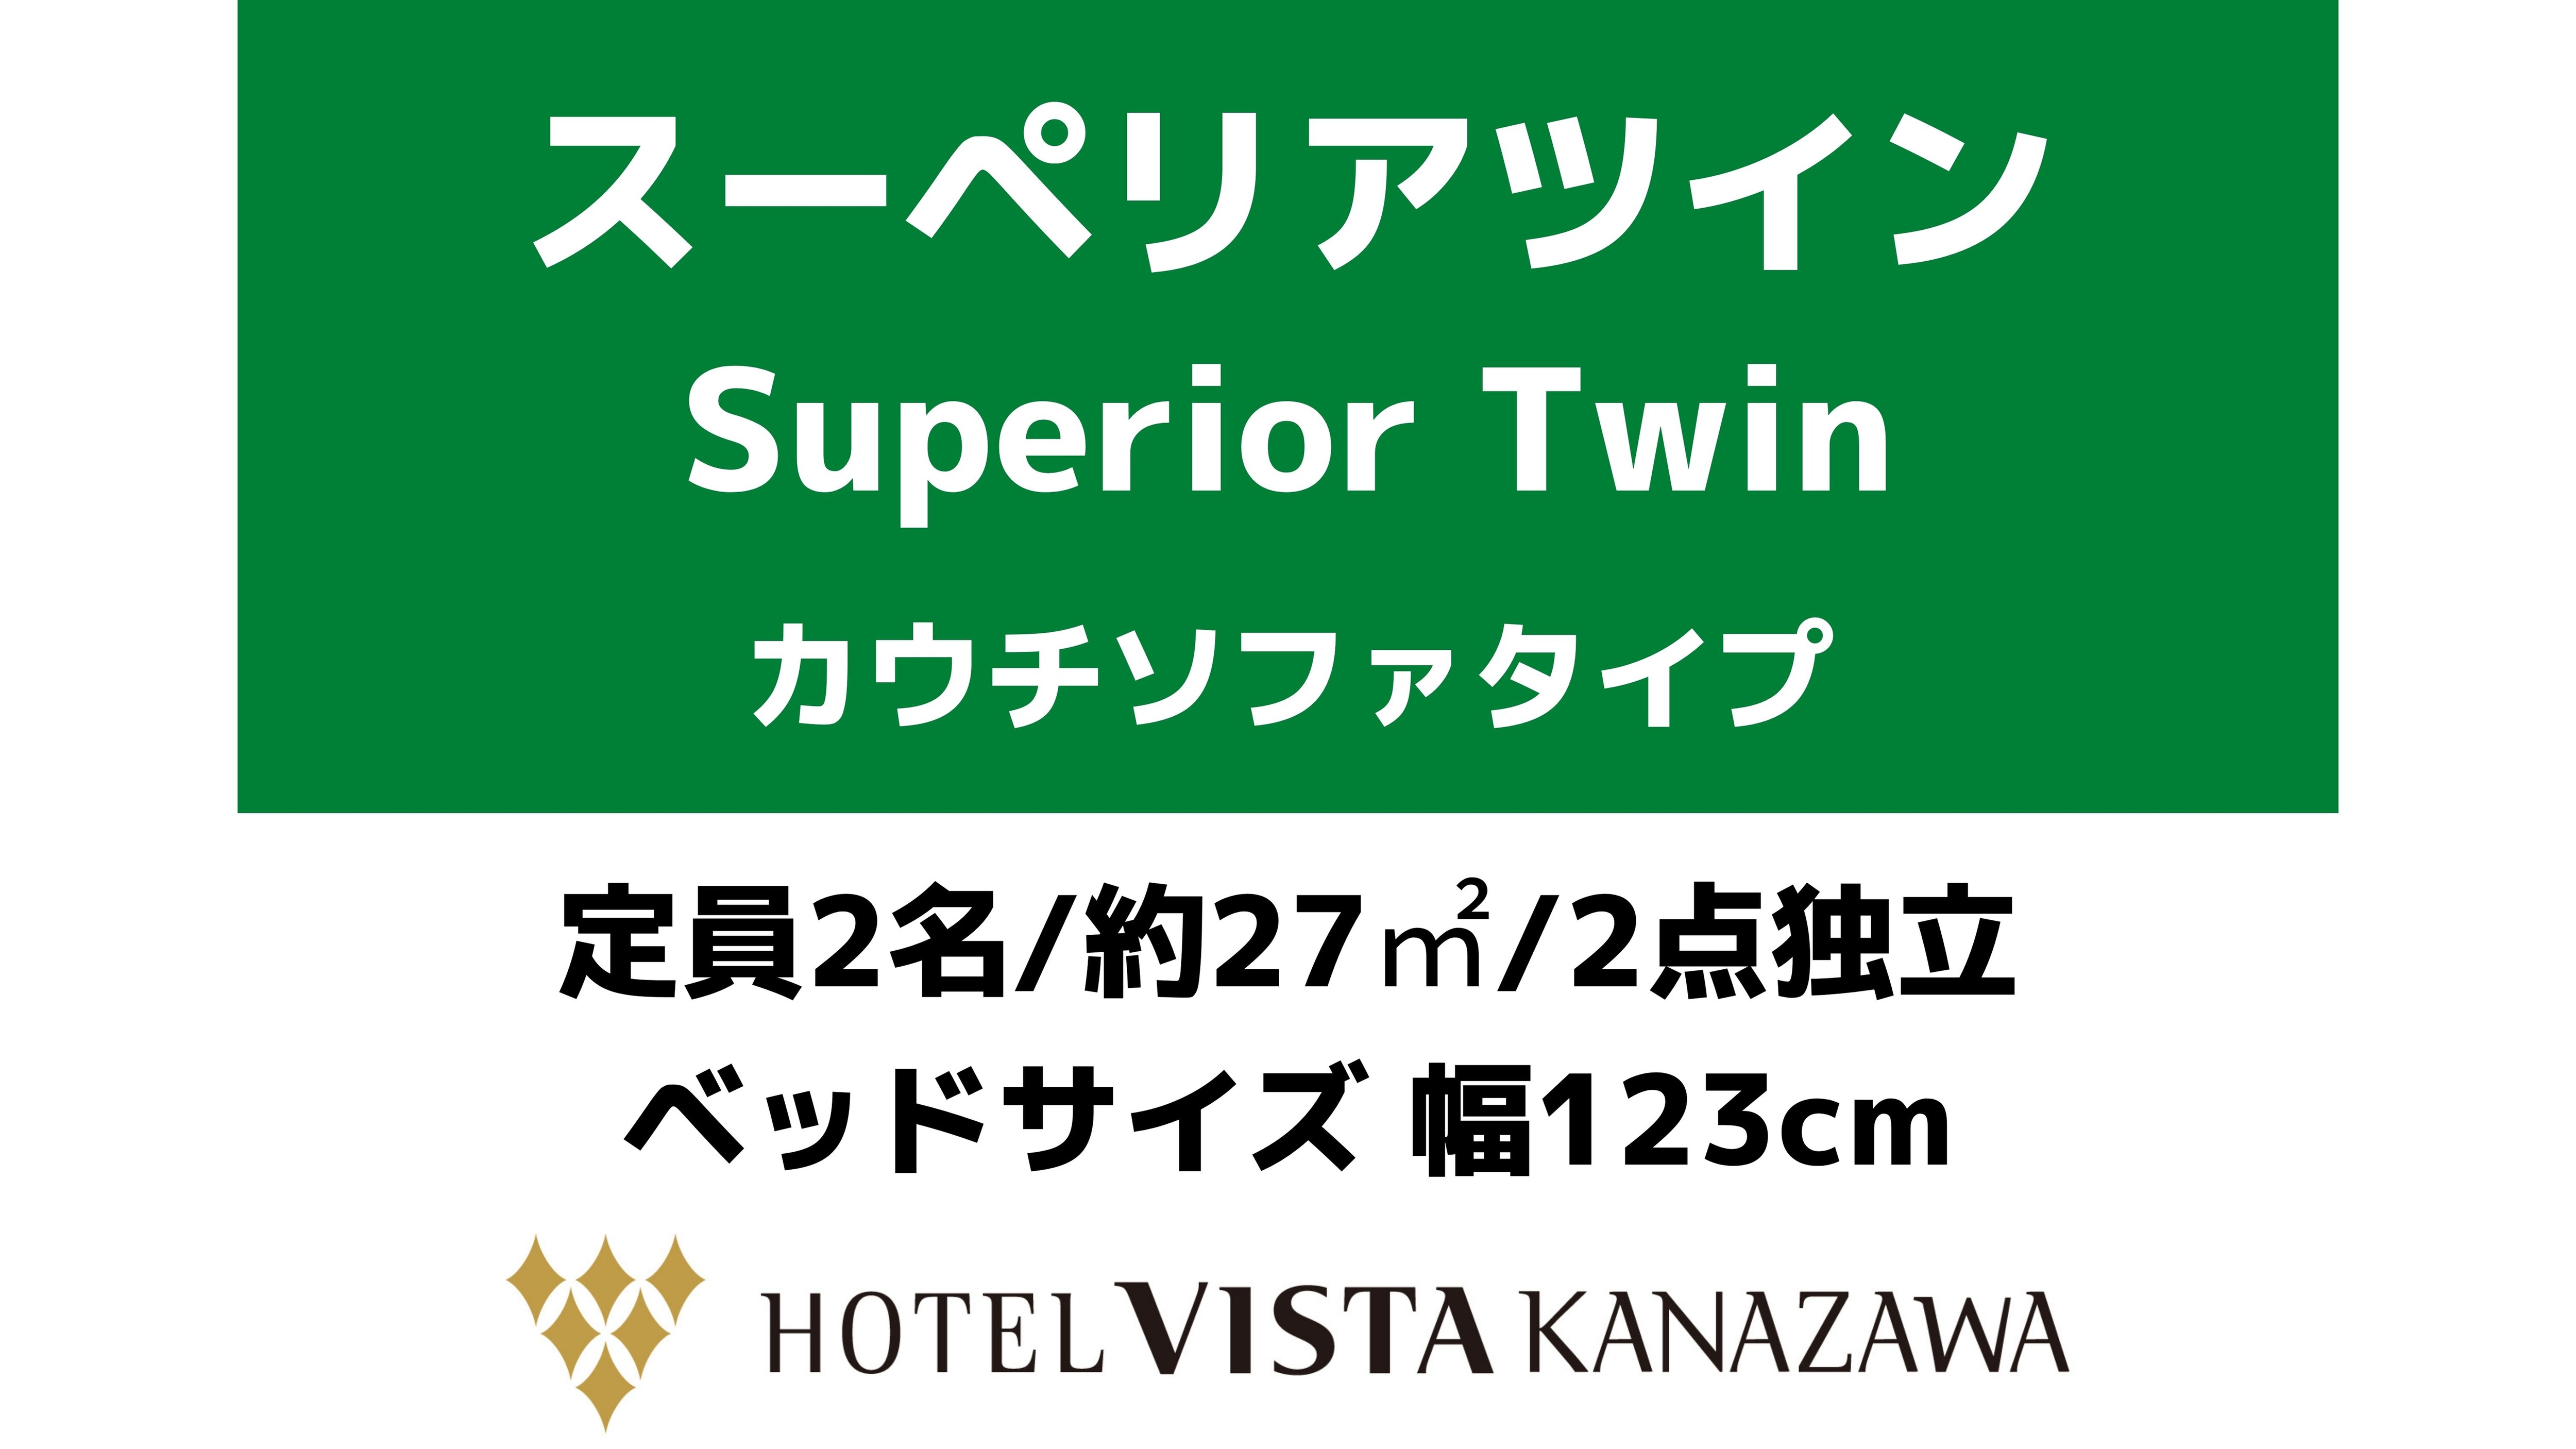 Hotel photo 14 of Hotel Vista Kanazawa.